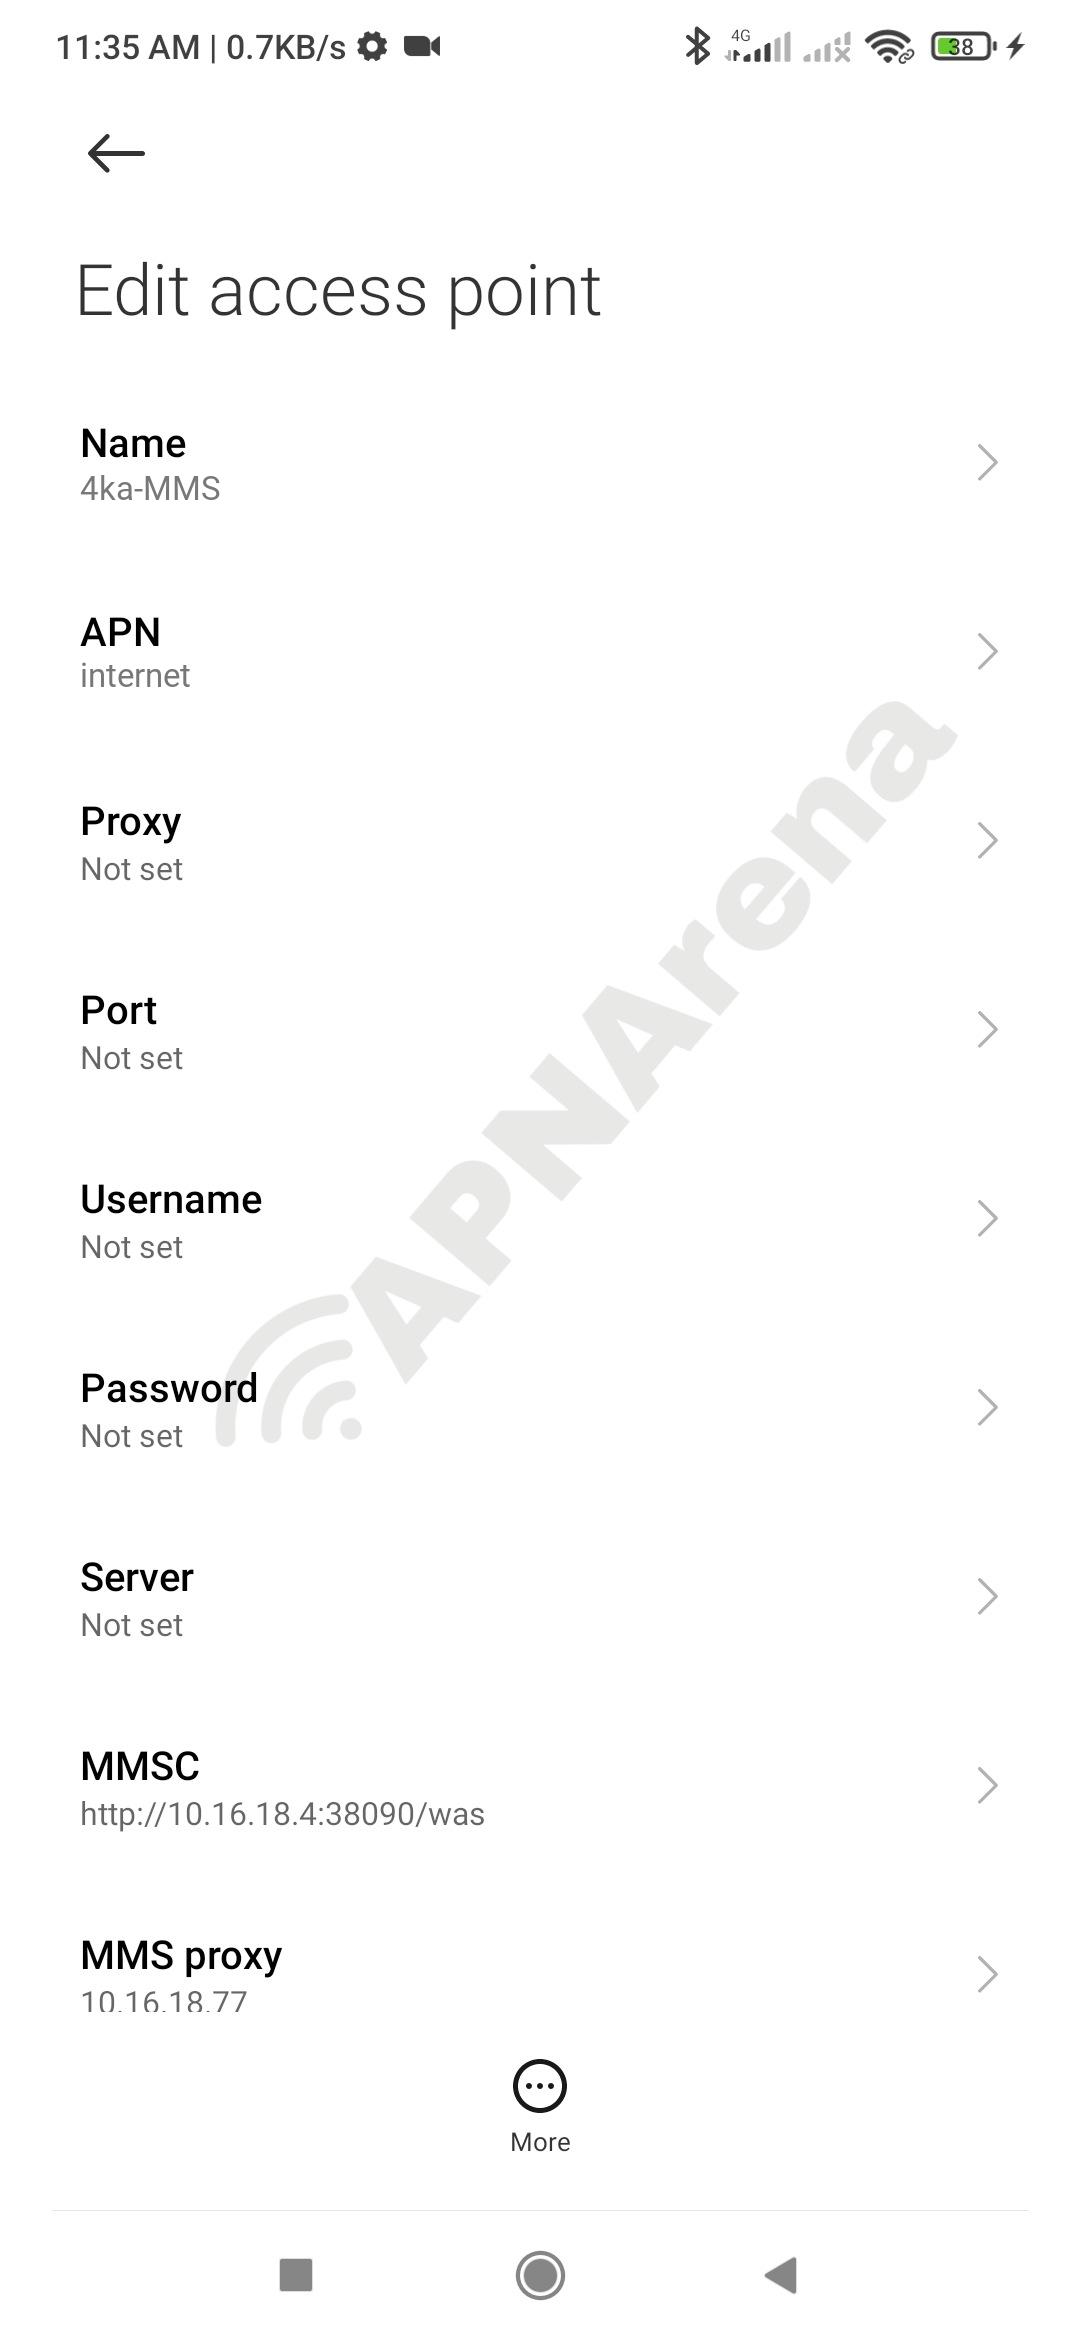 4ka (SWAN Mobile) MMS Settings for Android